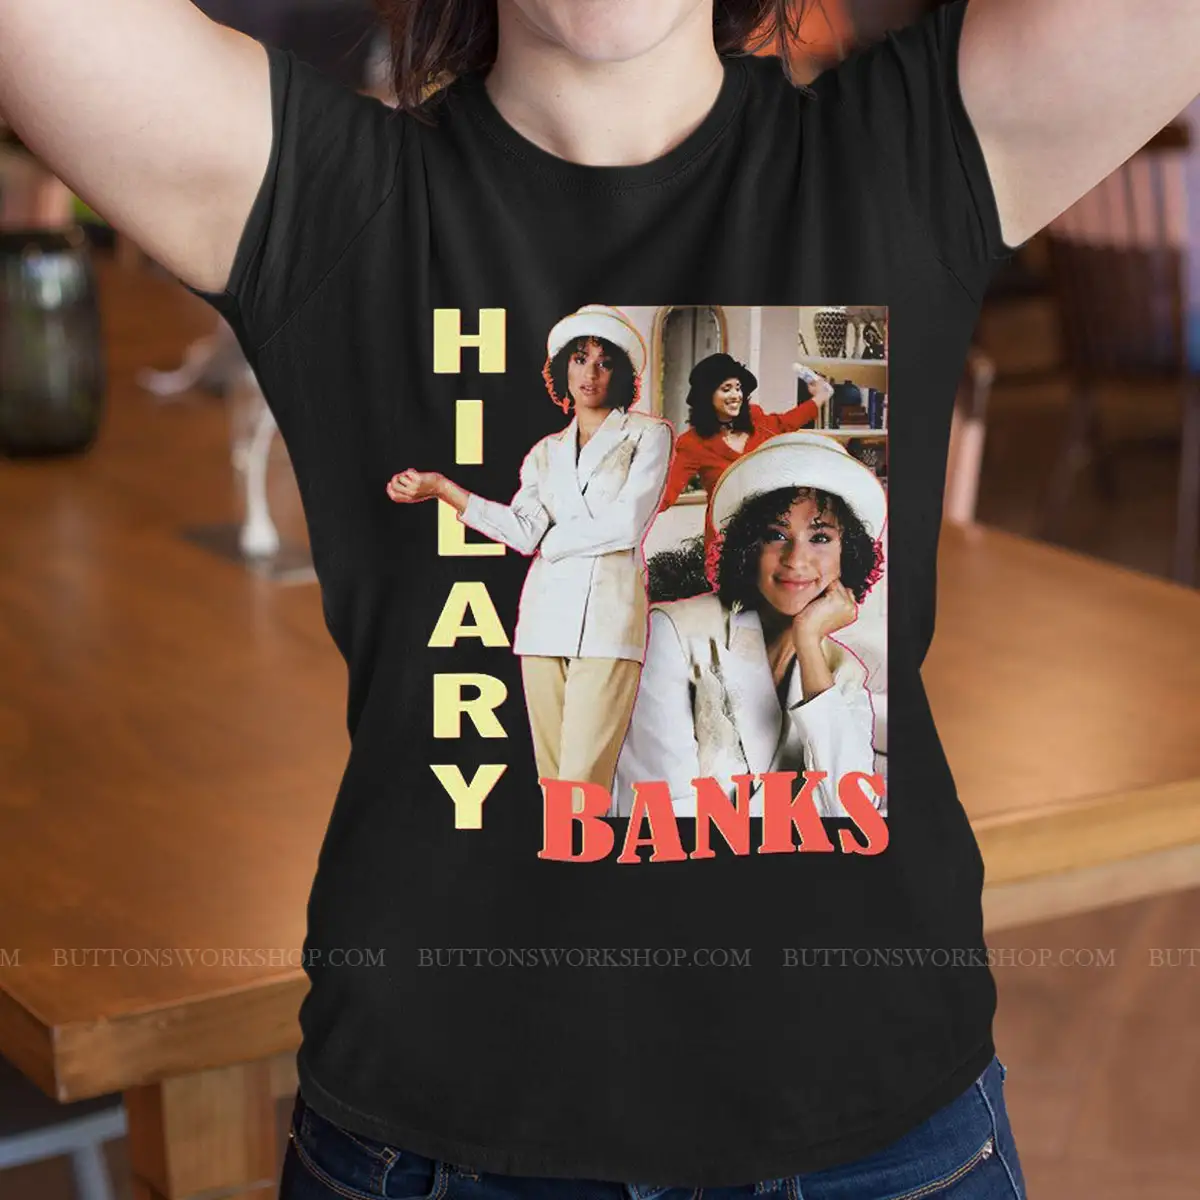 Hilary Banks T Shirt Unisex Tshirt